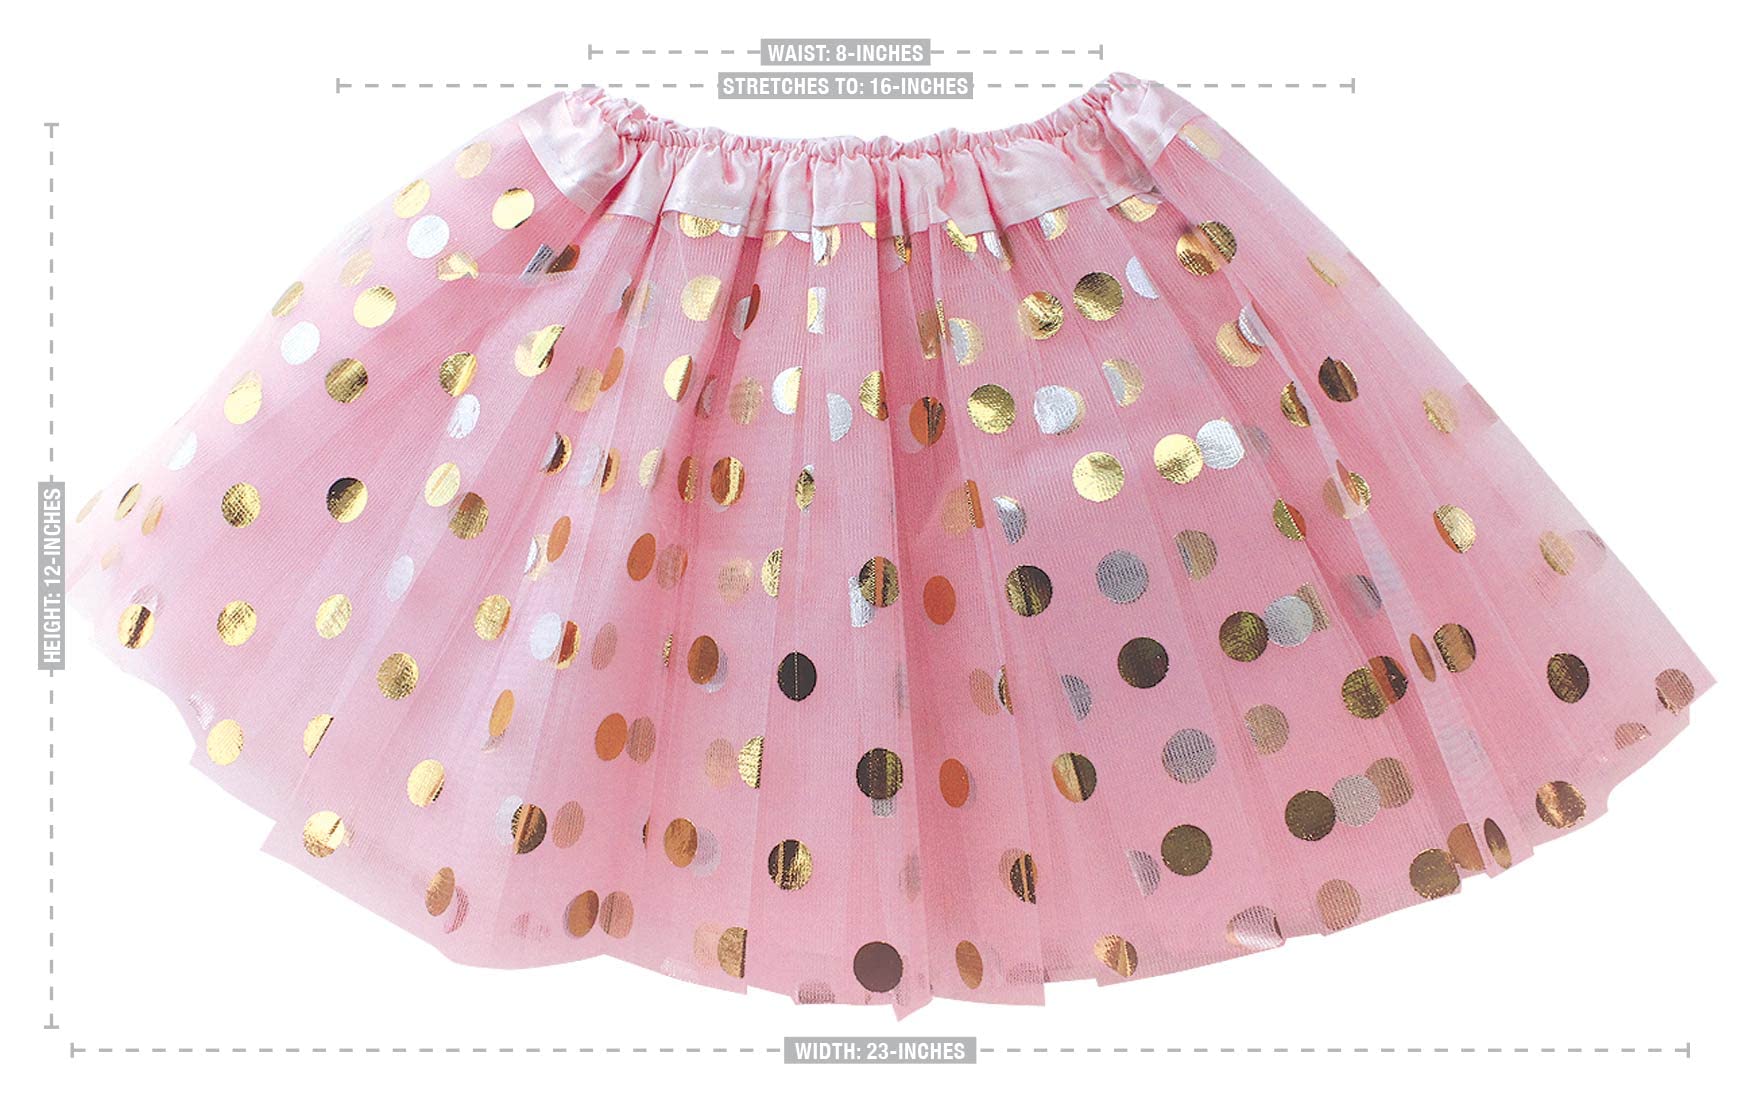 Polka Dot Tutu Skirt for Toddler Girls/Tutu Set Pink Tulle Skirts & White Tutus Sets- Girl Dress Up Halloween Costume, Spring/Summer Birthday Party,